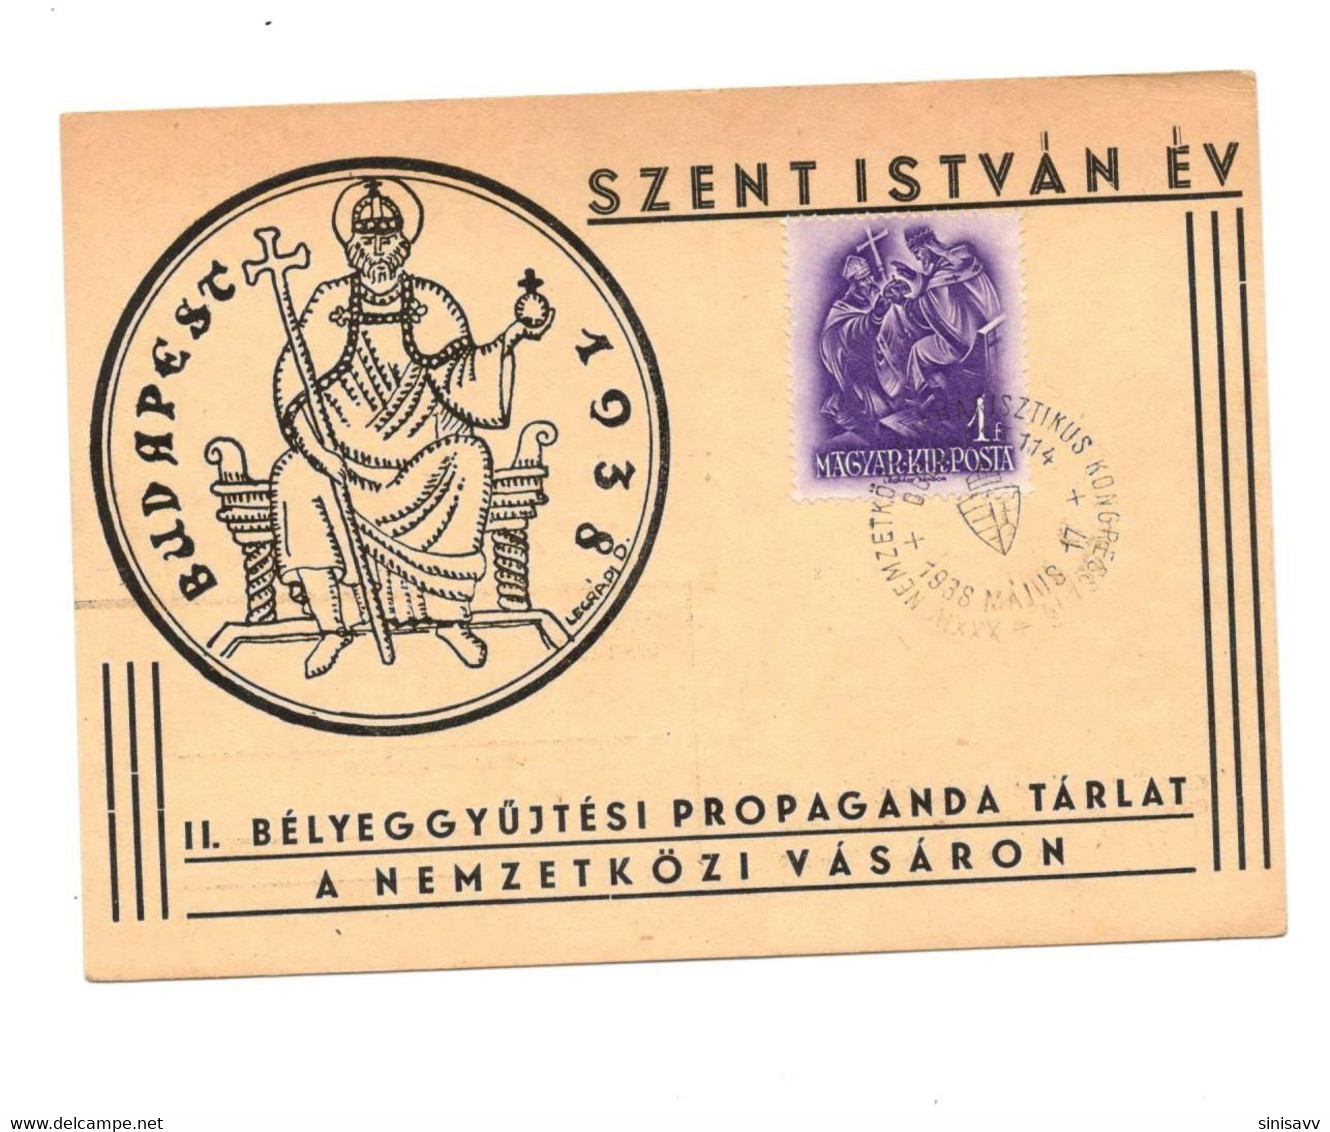 HUNGARY - BUDAPEST 1938 -  "SZENT ISTVAN EV" - Feuillets Souvenir